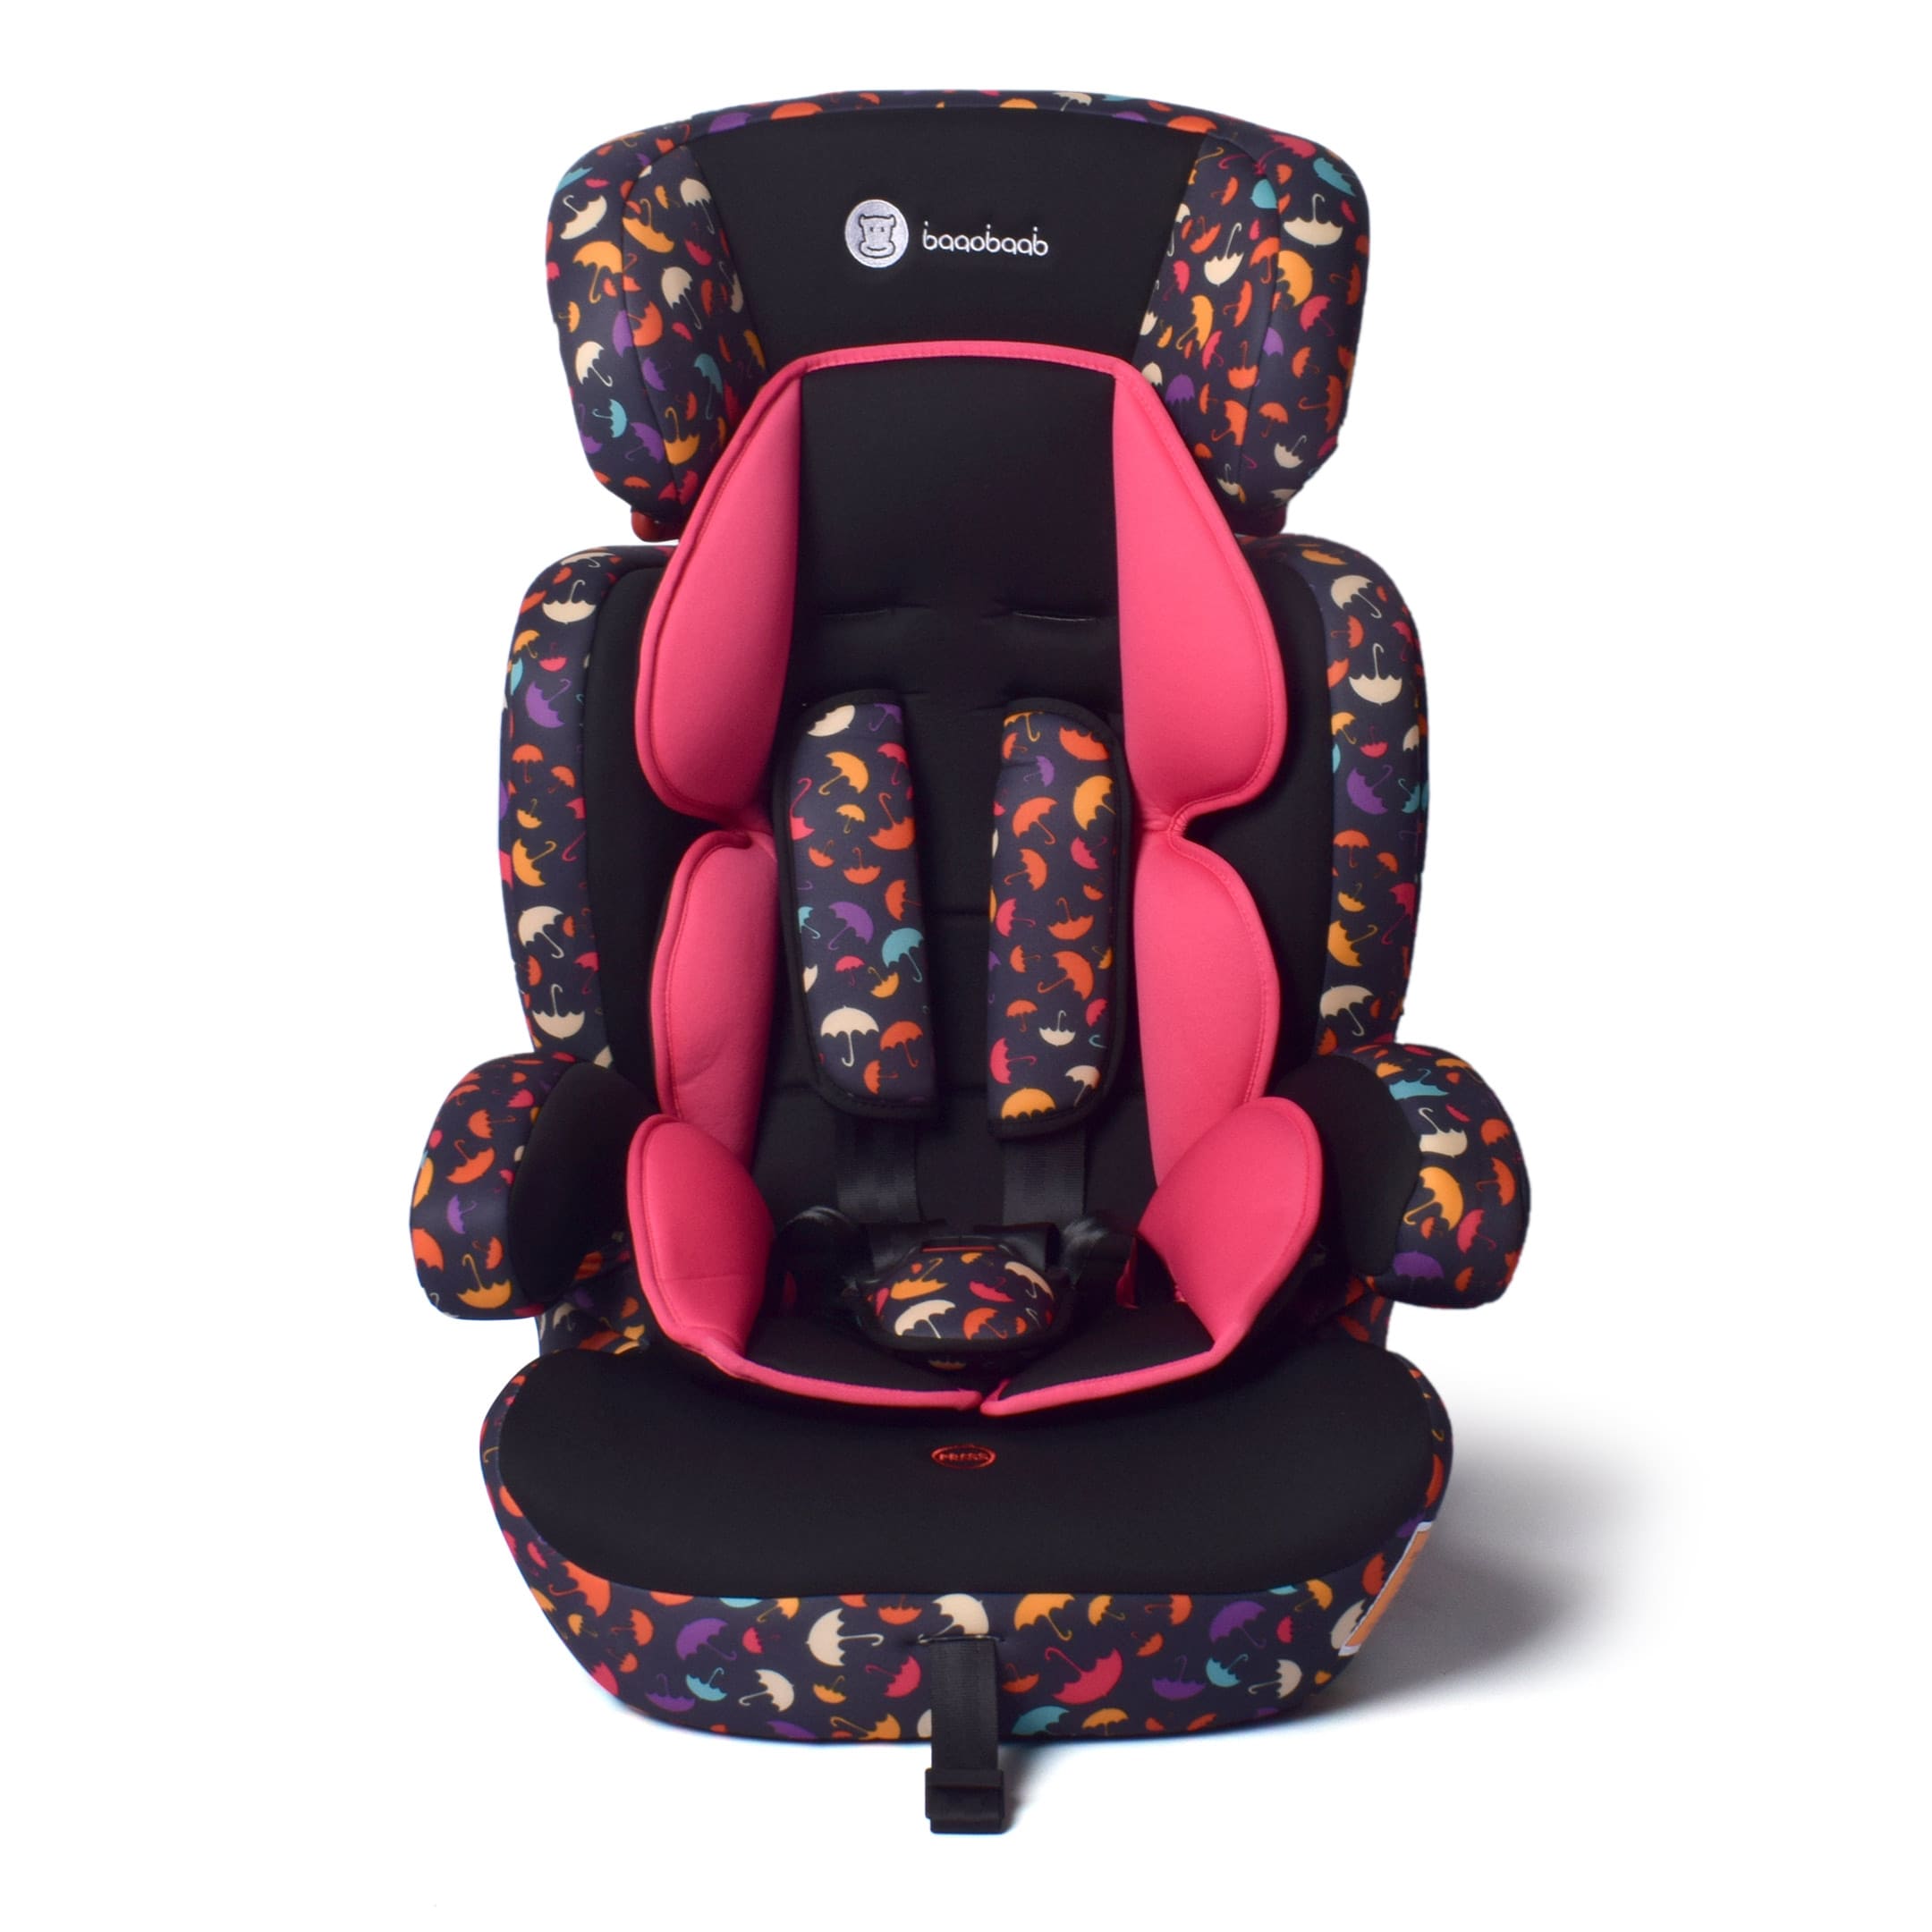 BaaoBaab Baby Safety Car Seat